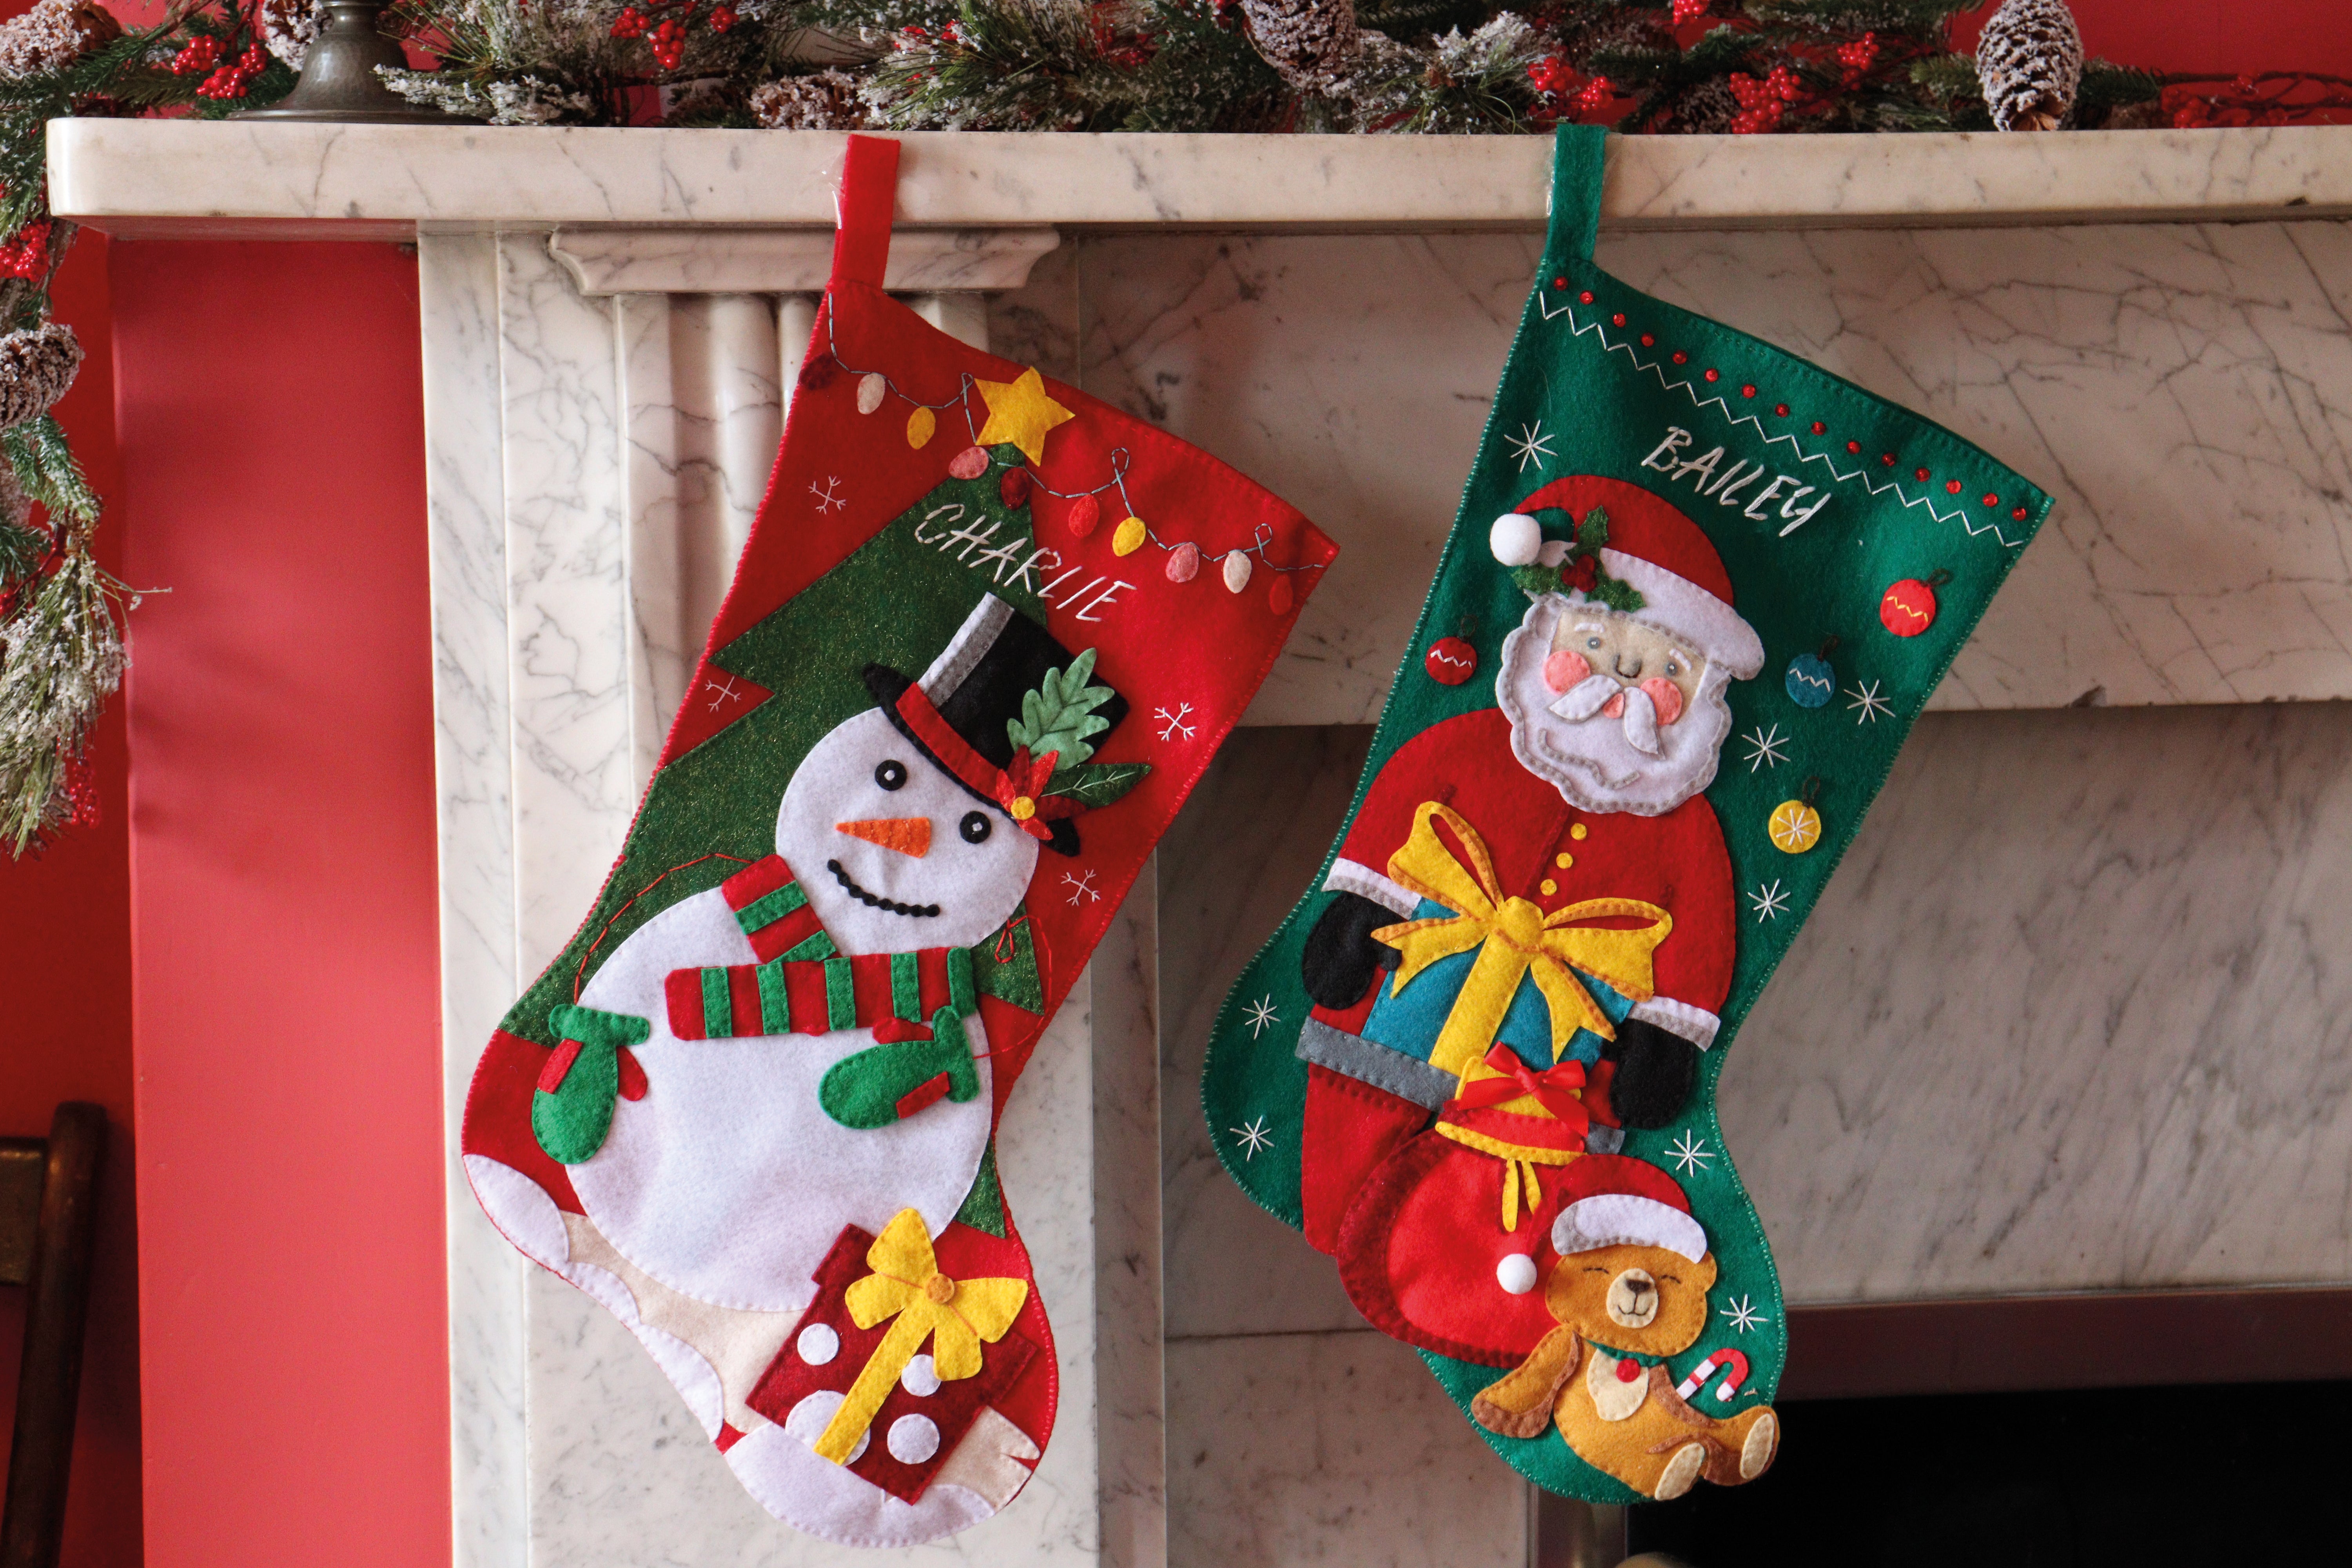 Trimits Felt Stocking Craft Kit: Father Christmas